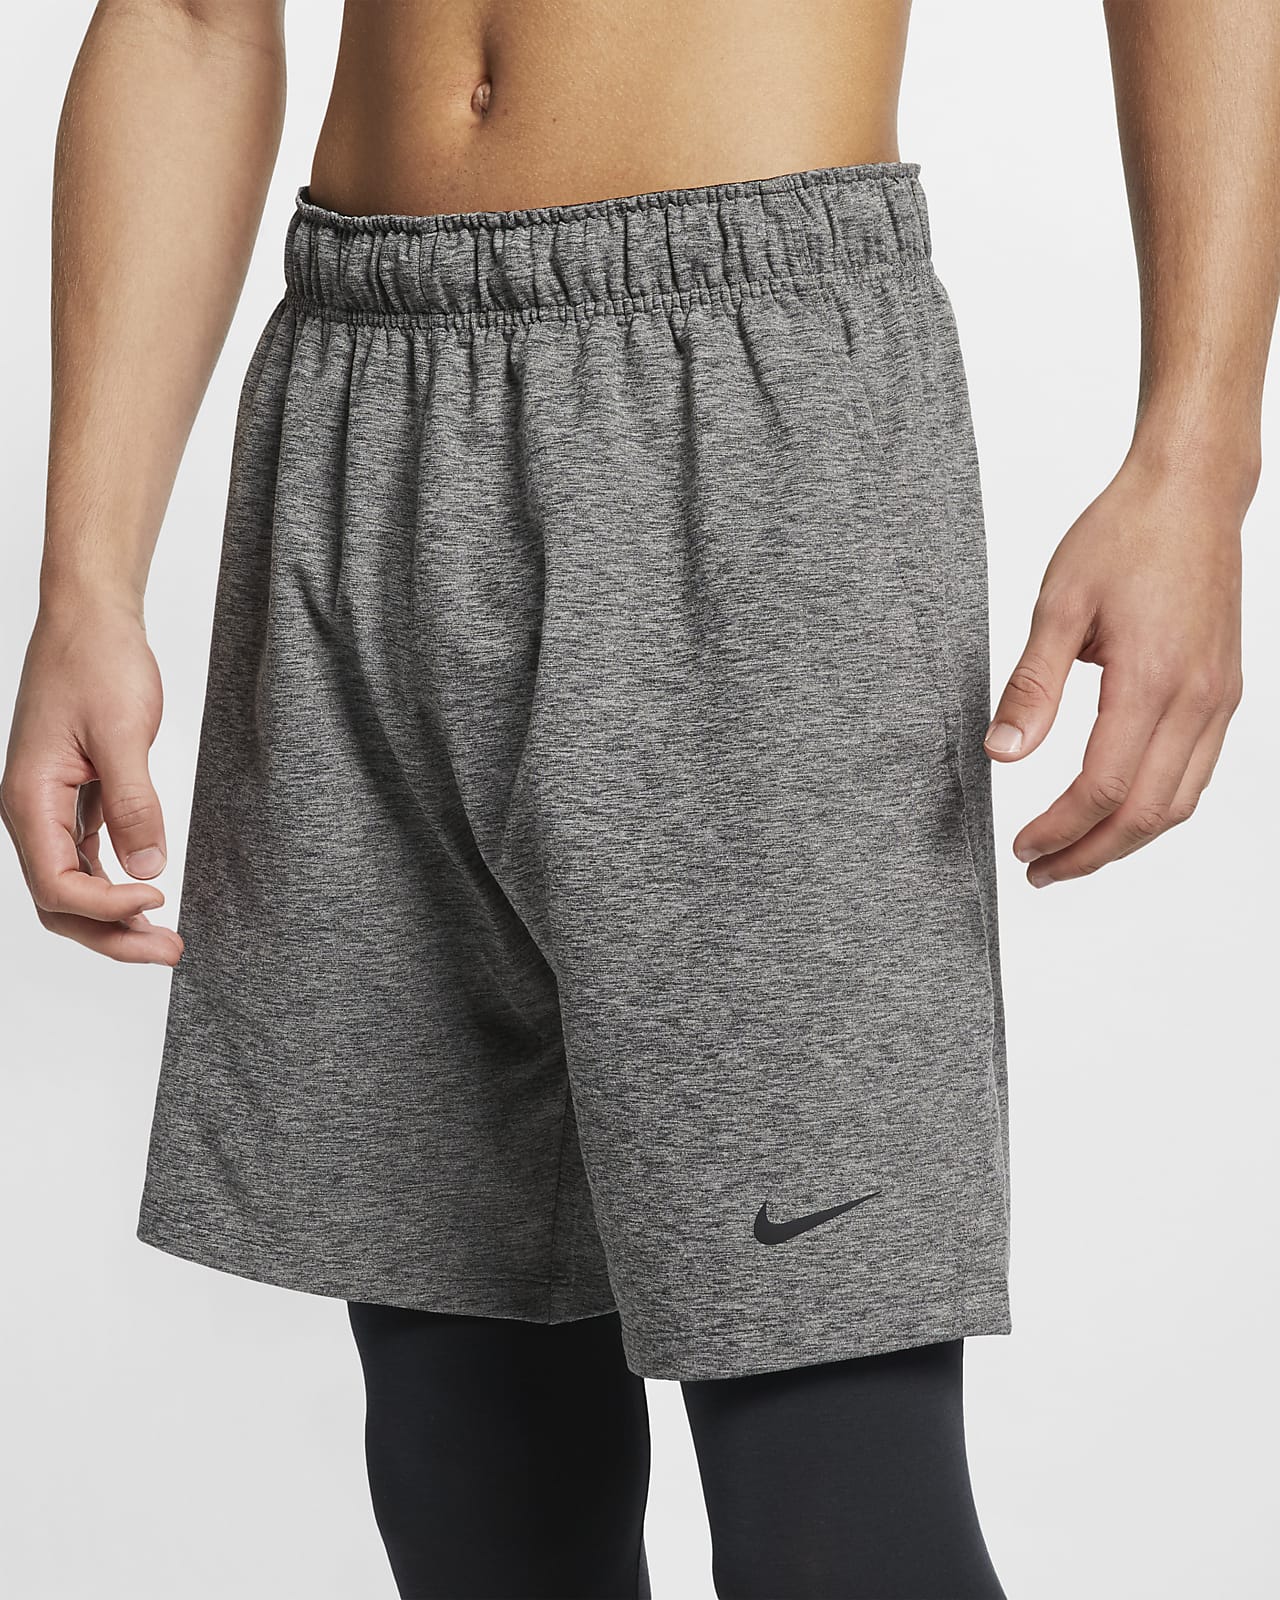 men's nike dri fit shorts grey